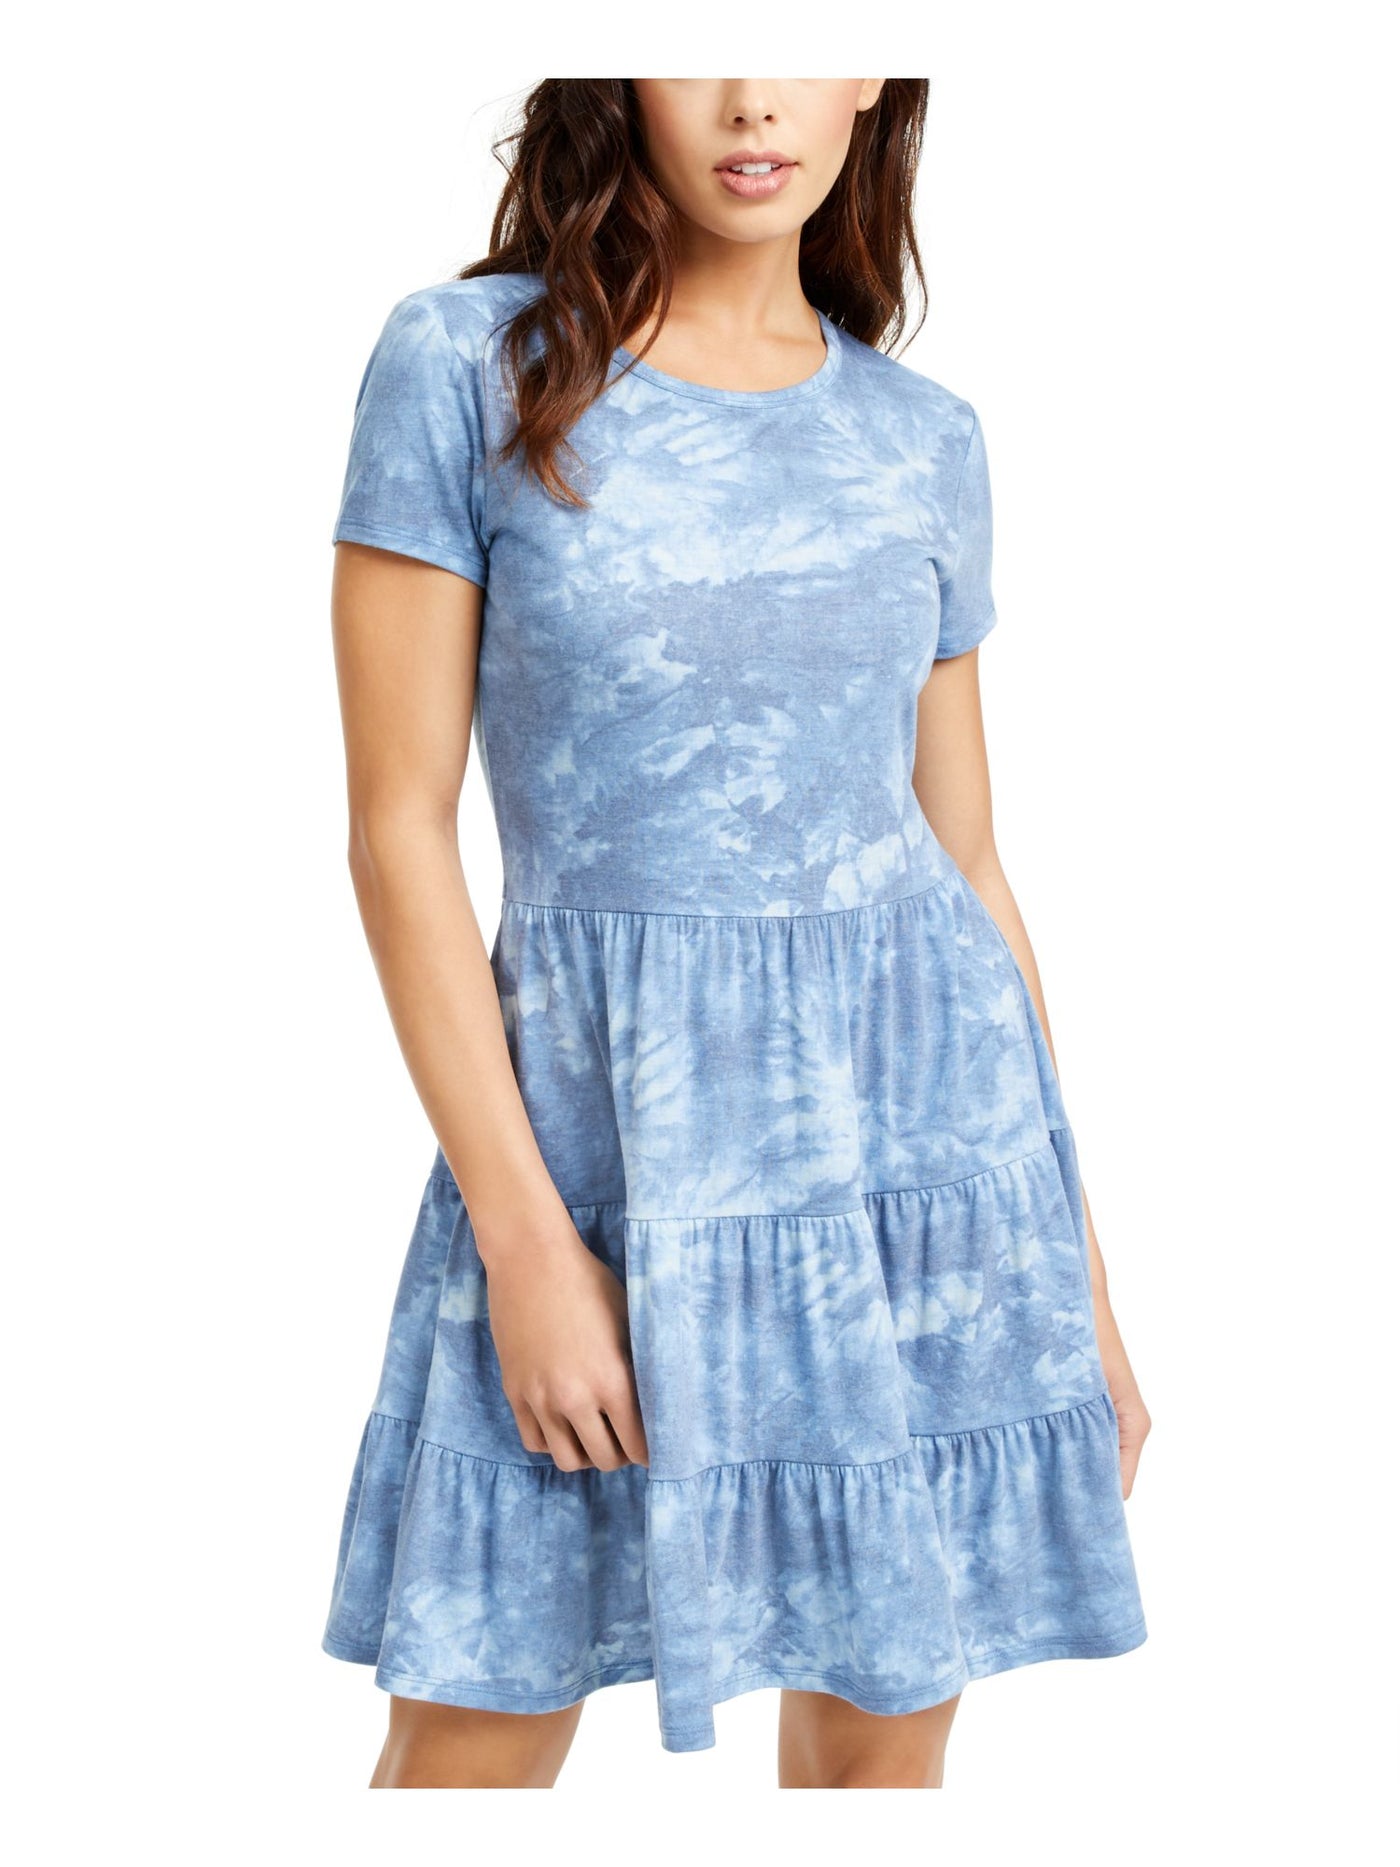 BEBOP Womens Blue Tiered Acid Wash Short Sleeve Above The Knee Fit + Flare Dress Juniors L